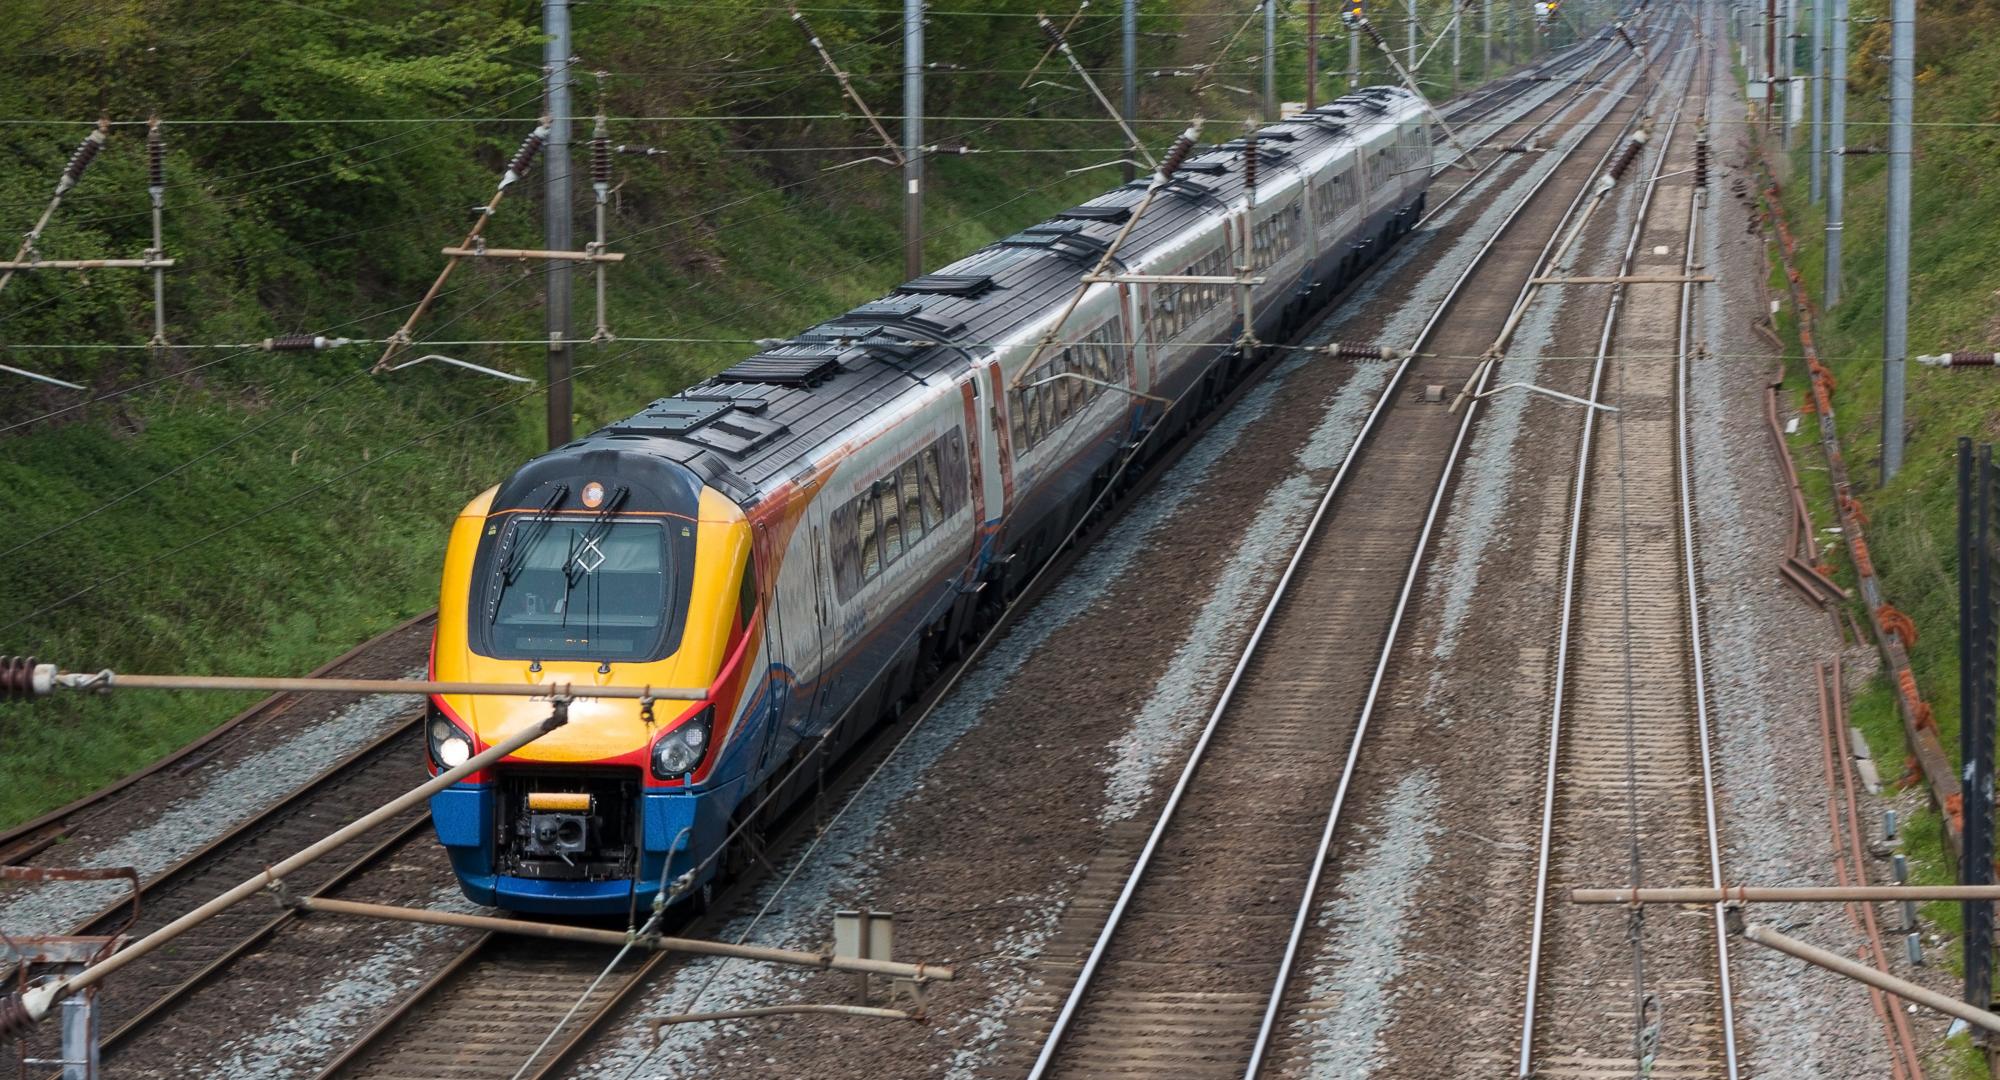 British East Midlands train in motion on the railway, via Istock 